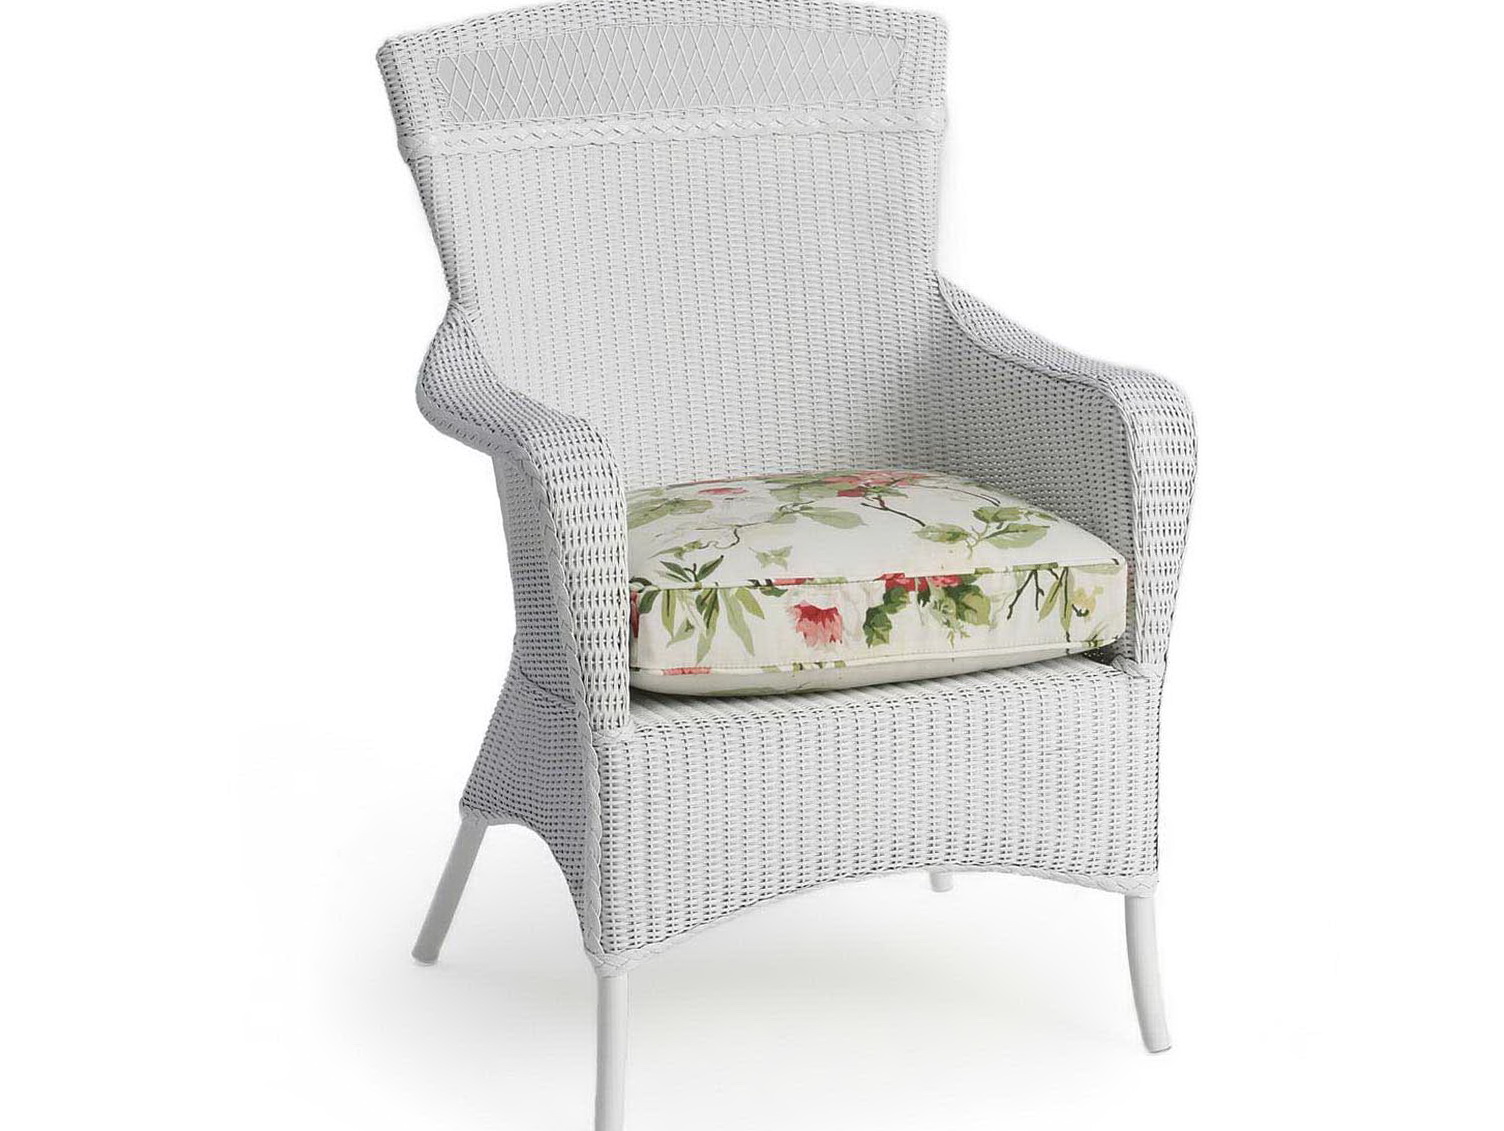 Replacement Outdoor Chair Cushions Australia | Home Design Ideas